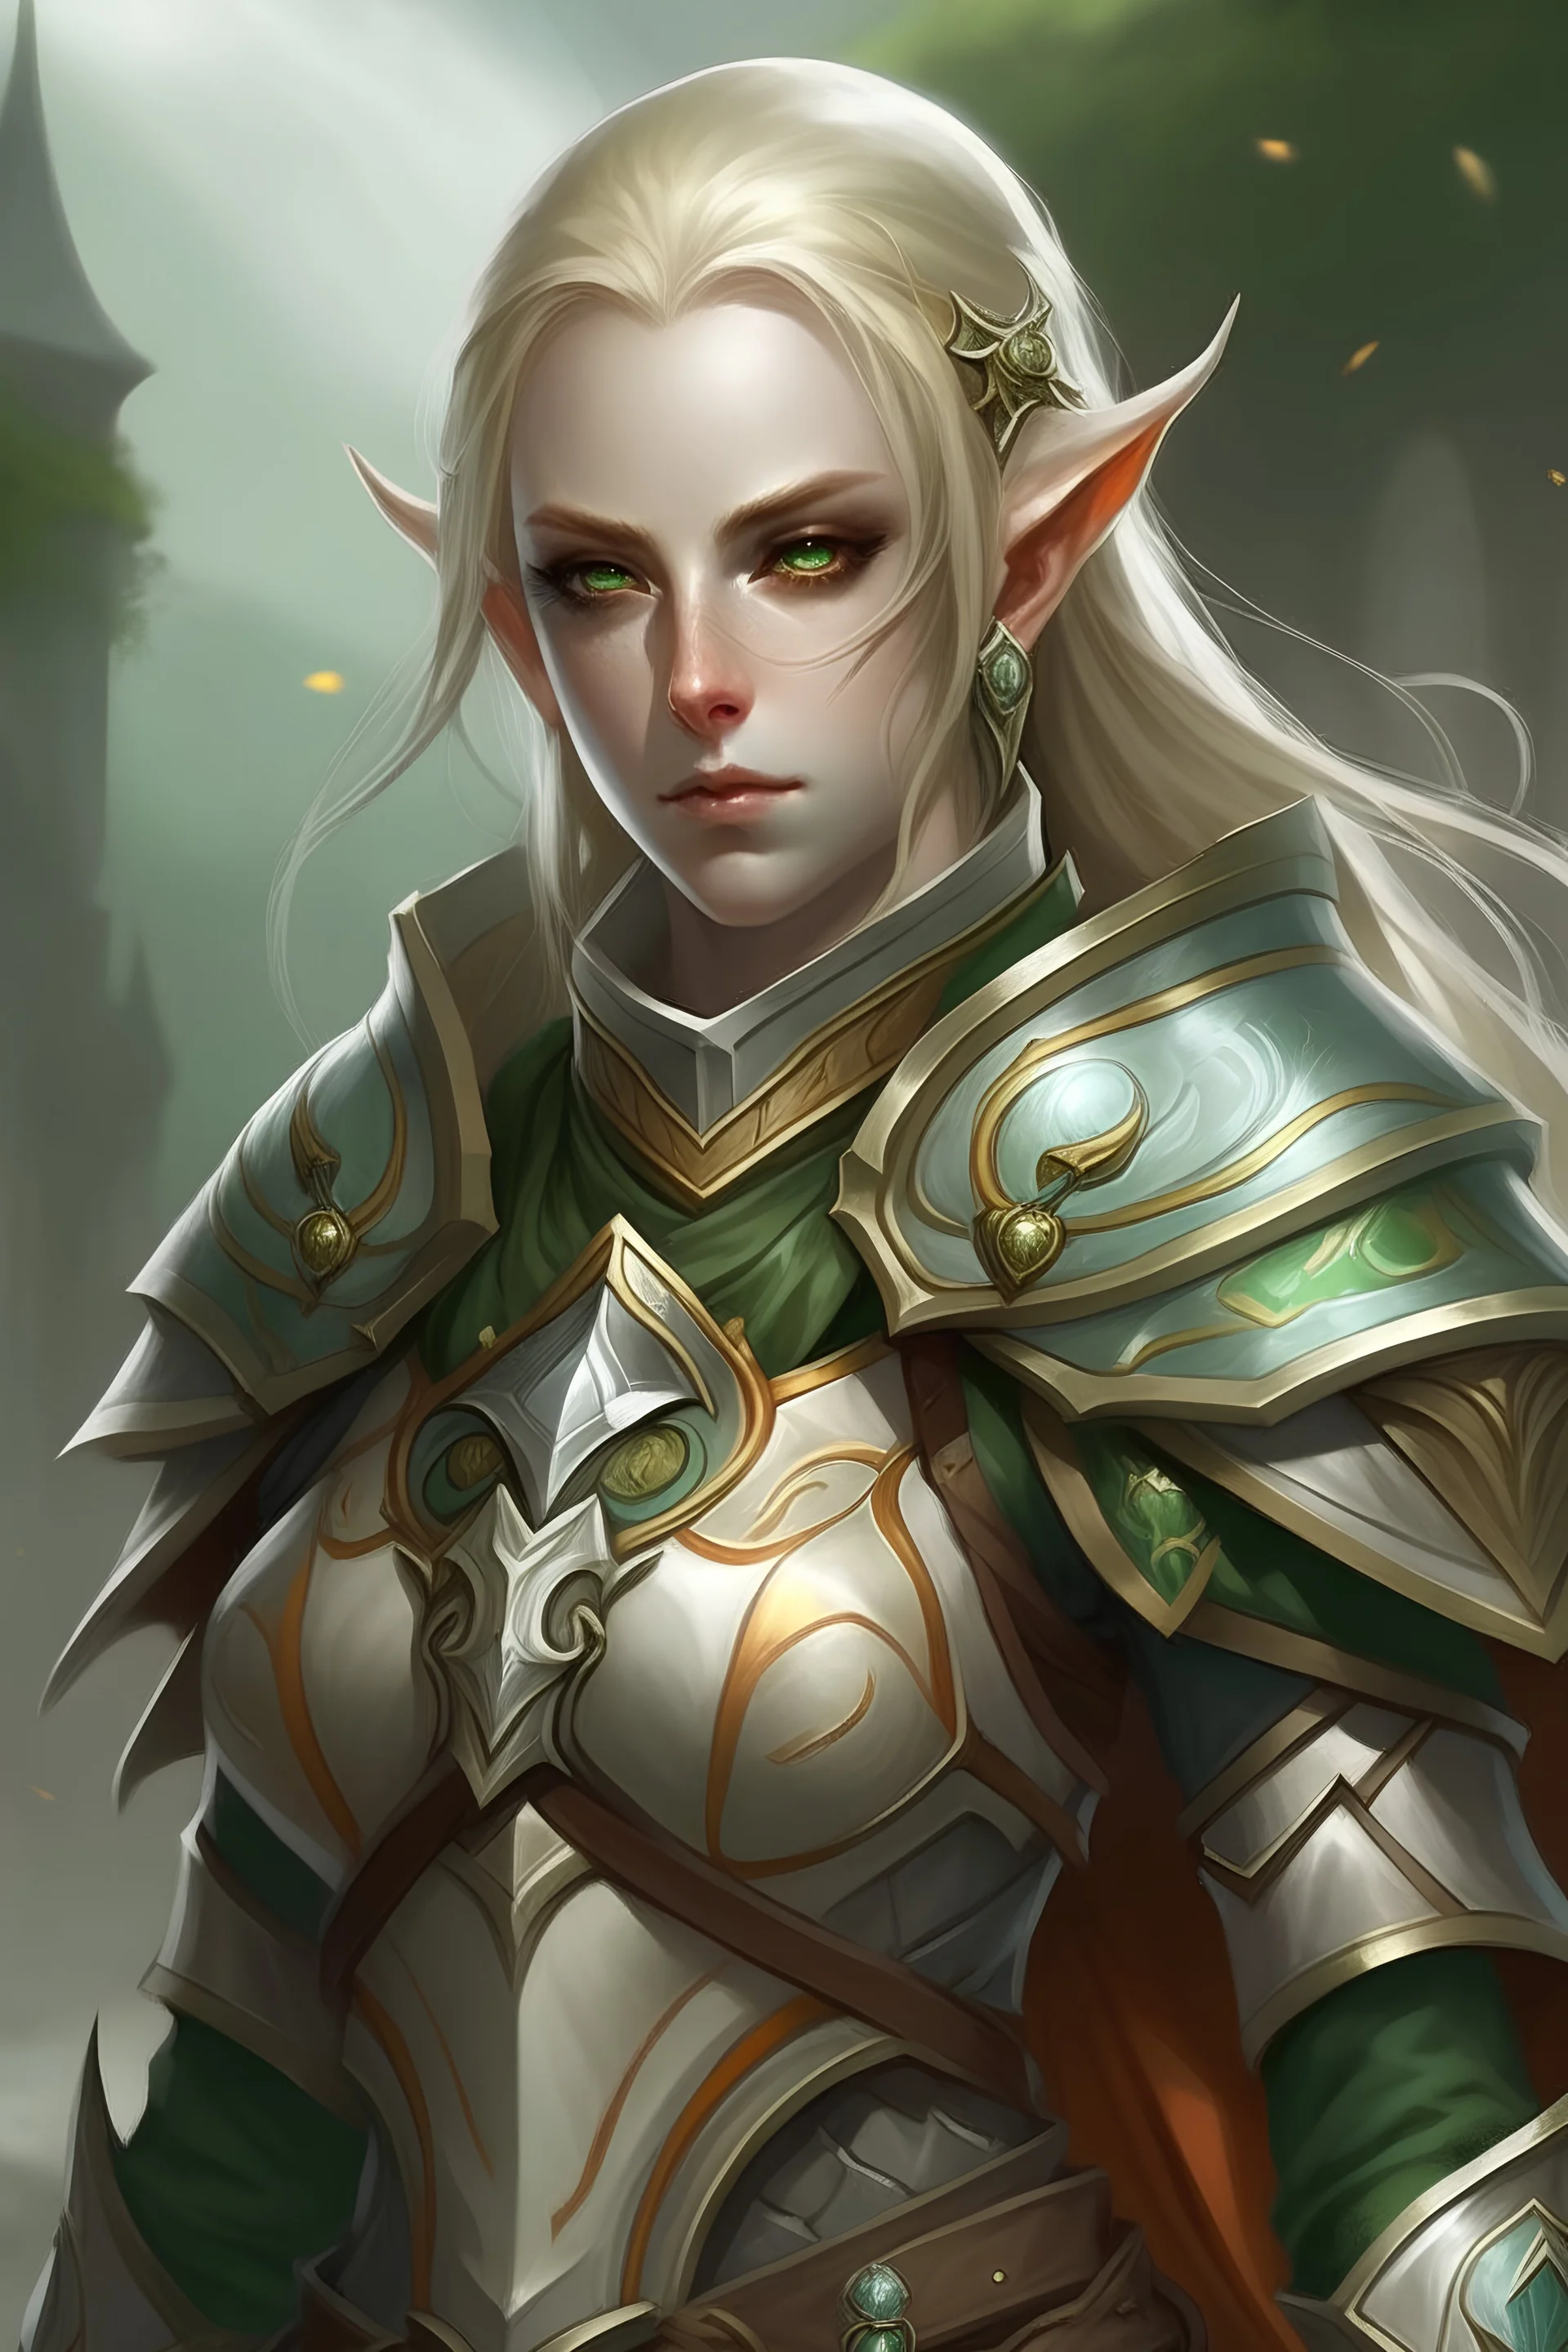 Eladrin Elf, paladin, Mail armor, drawn blade, elven shield on her back, blonde-light brown hair, green eyes, slightly annoyed.